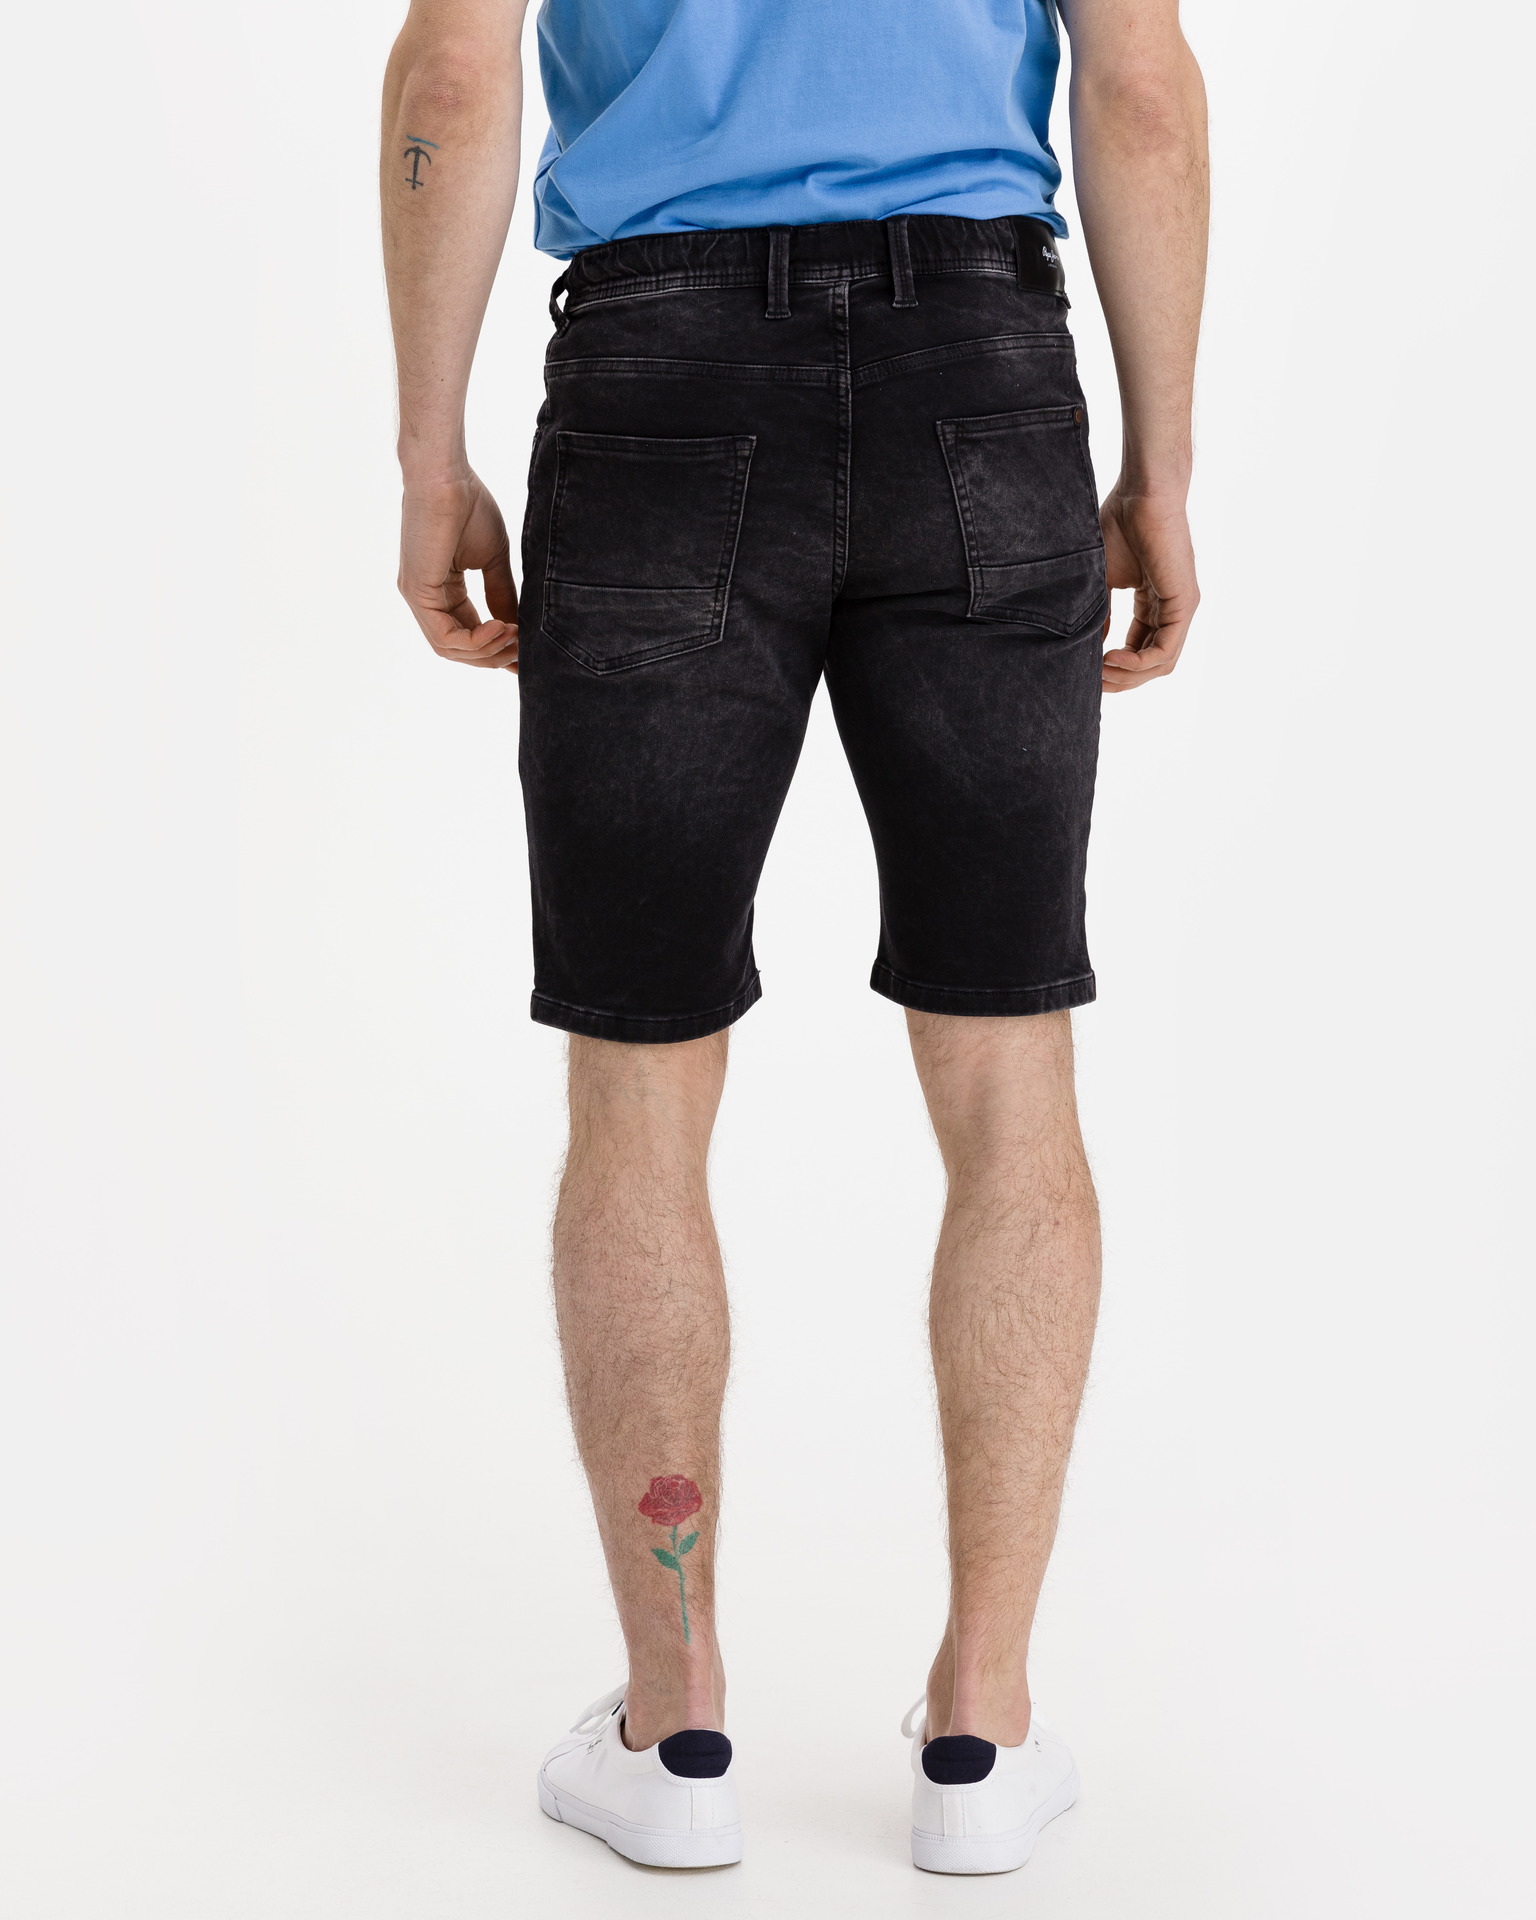 Flower Diamond Denim Shorts: Luxury Streetwear For Men Slim Fit, Hip Hop  Style From Happy_buying, $43.99 | DHgate.Com